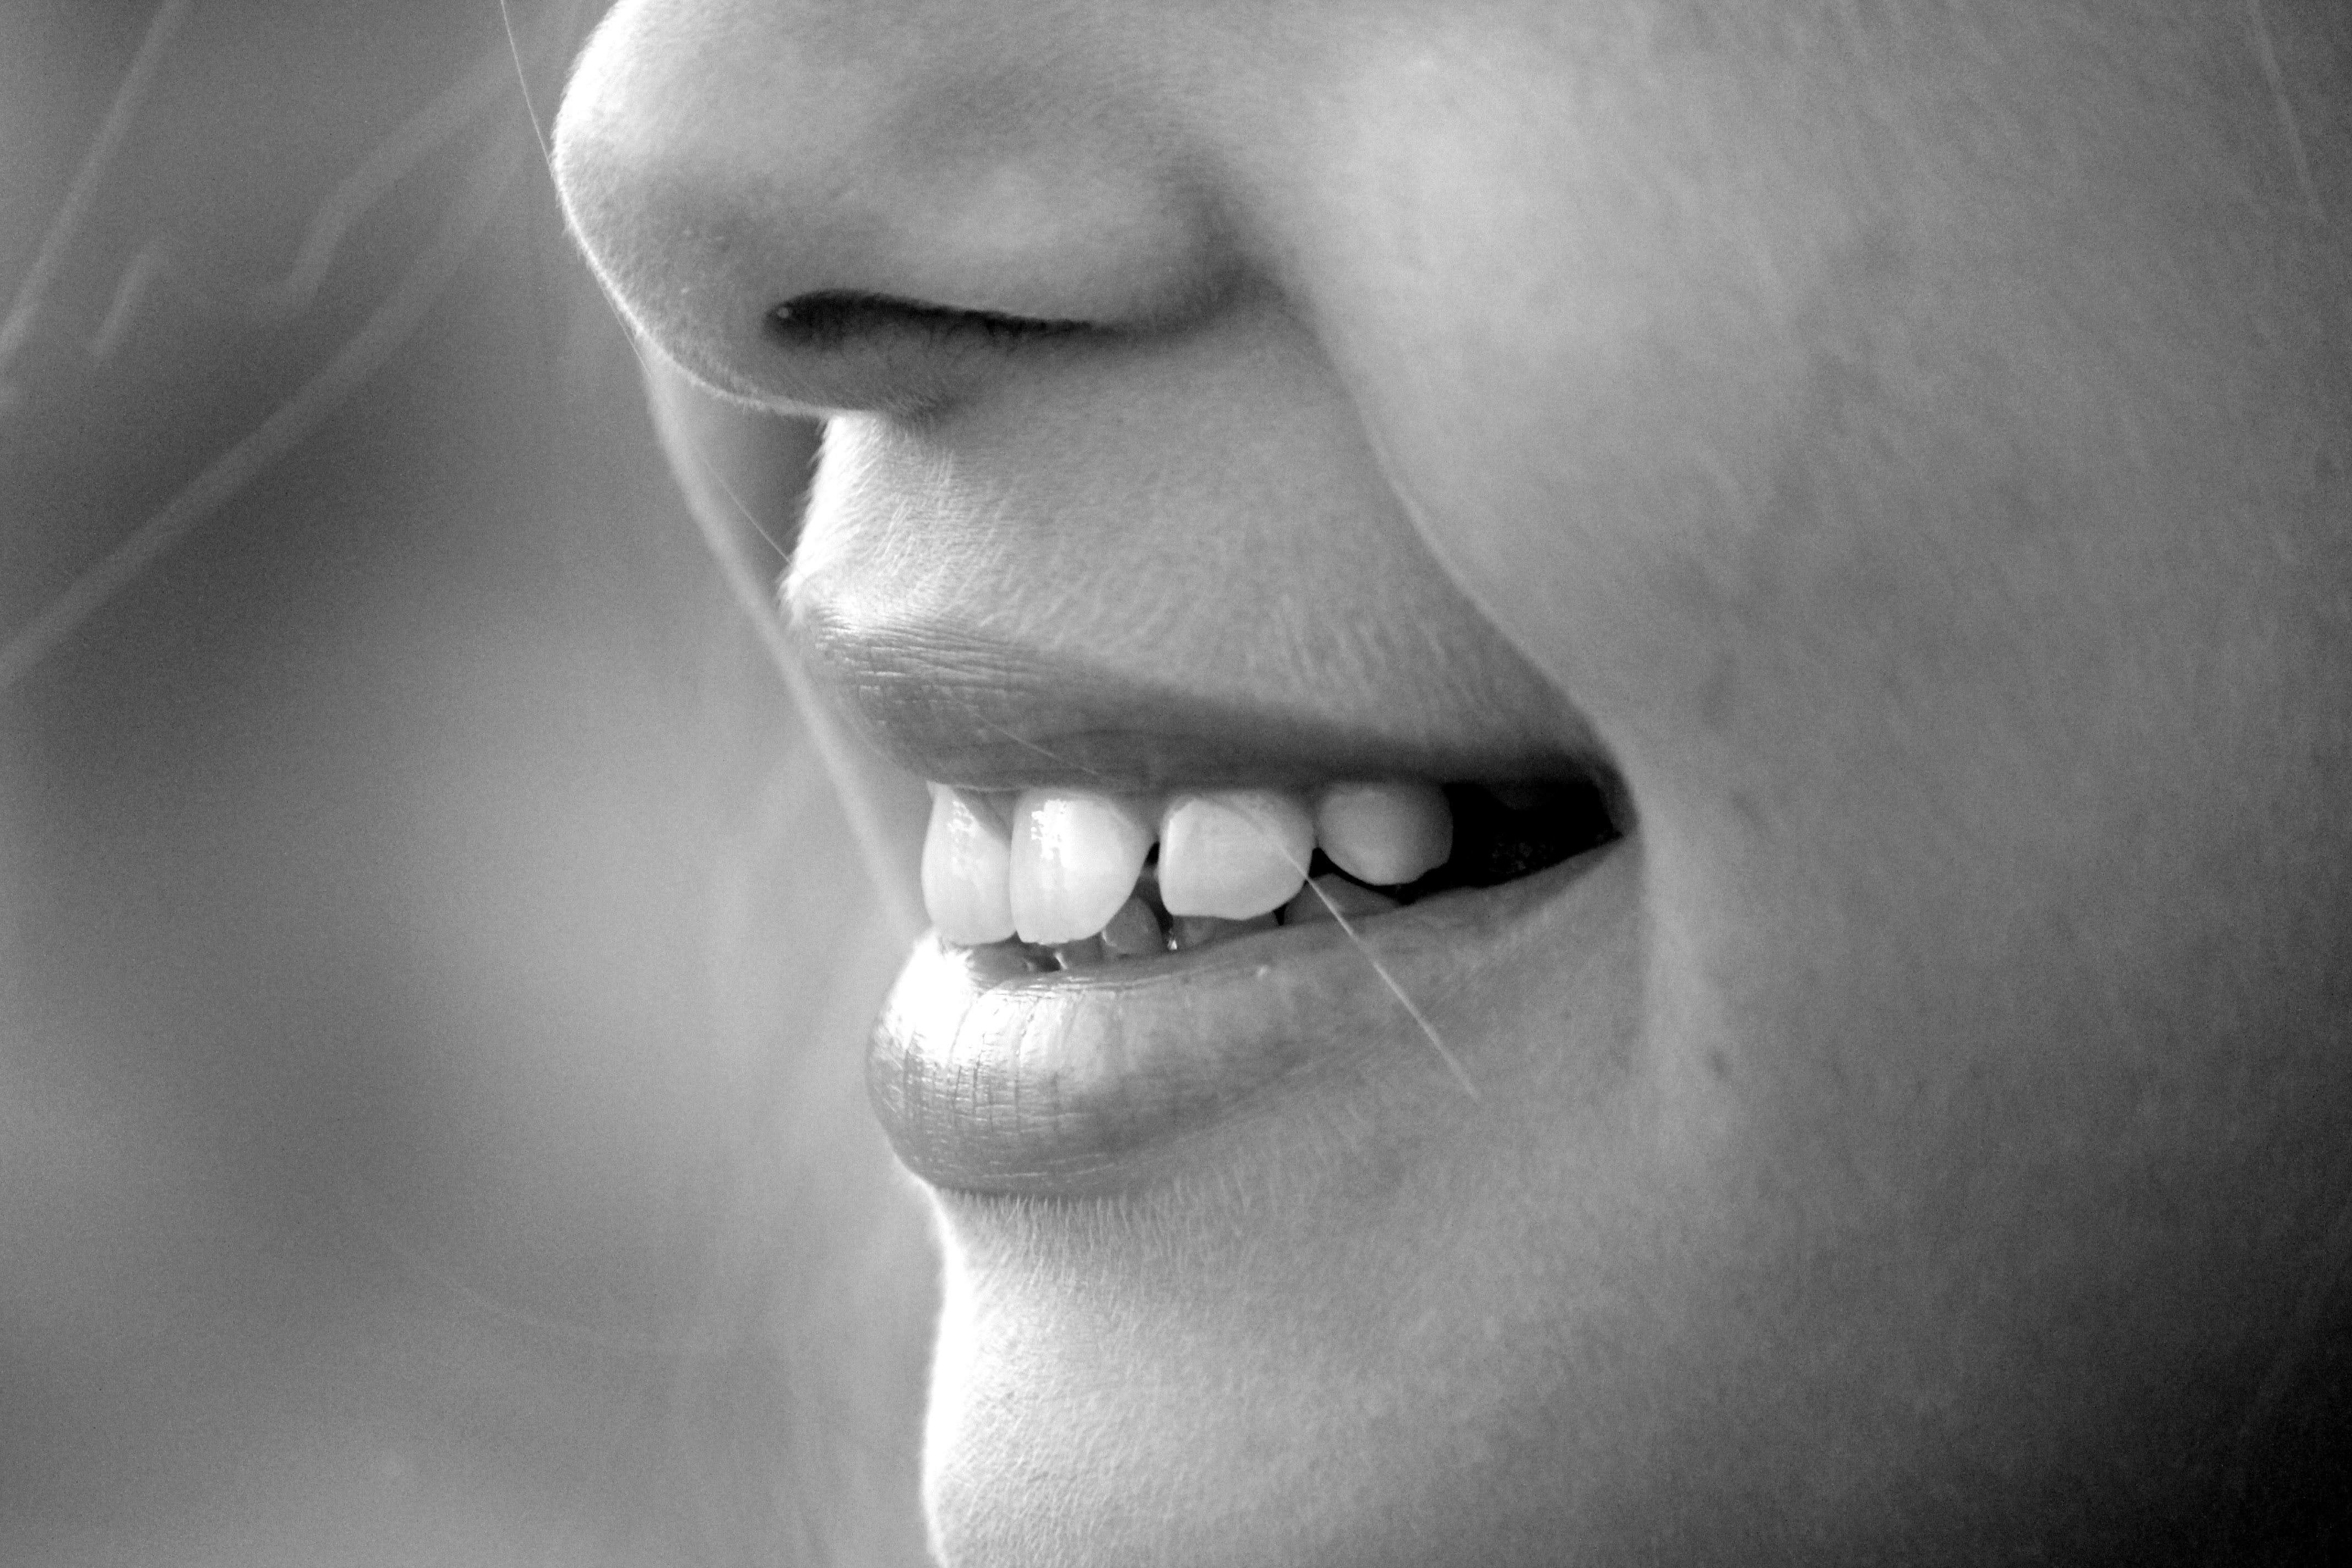 An image of a lady's teeth | Photo: Pixabay